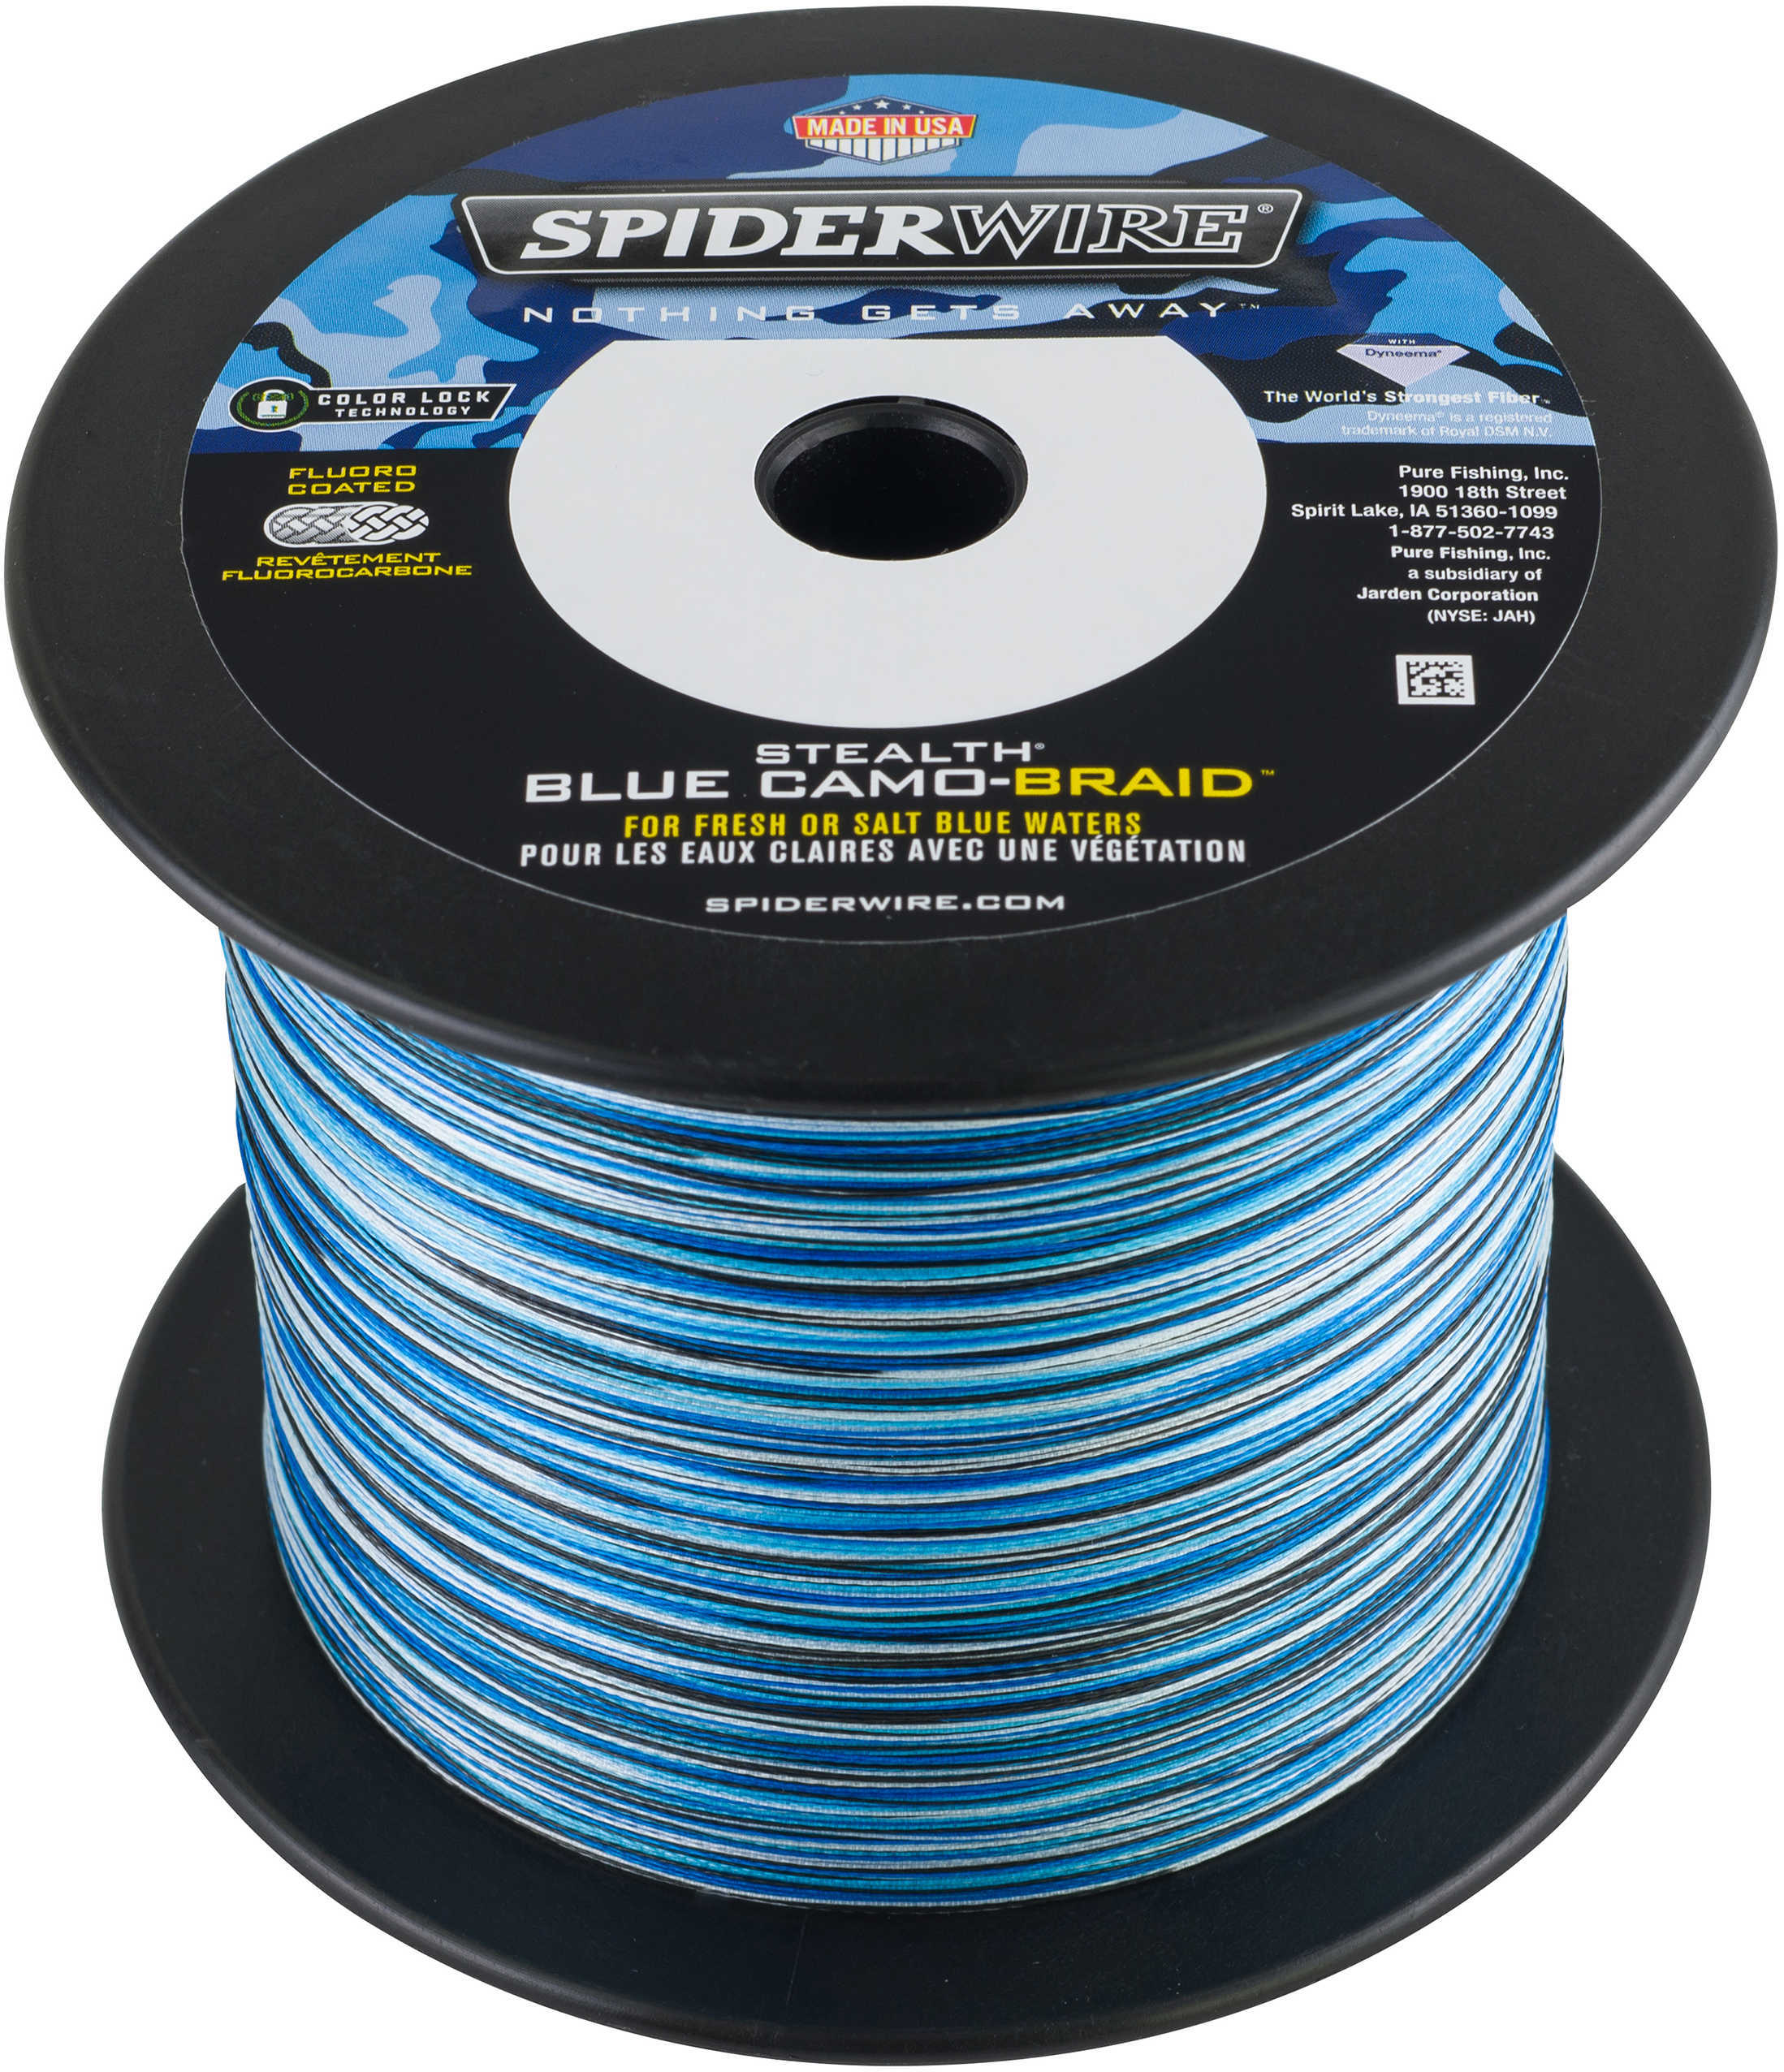 Spiderwire Stealth Braid 3000 Yards , 100 lbs Strength, 0.020" Diameter, Blue Camo Md: 1370470